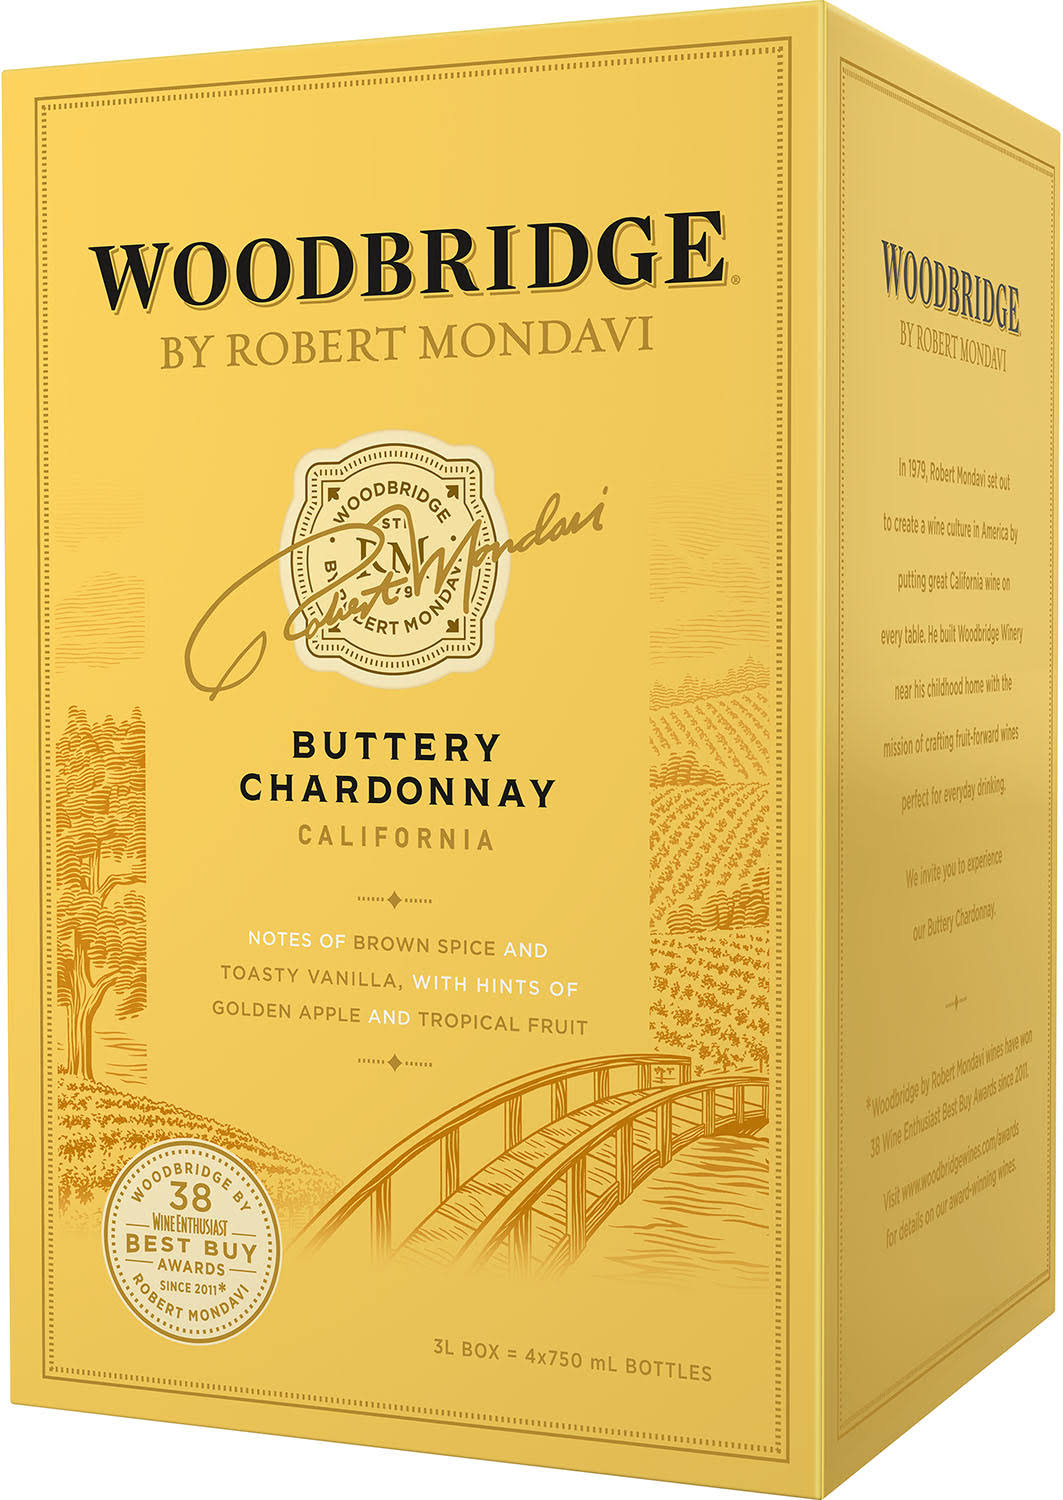 Woodbridge by Robert Mondavi Buttery Chardonnay White Wine Box - 3 L